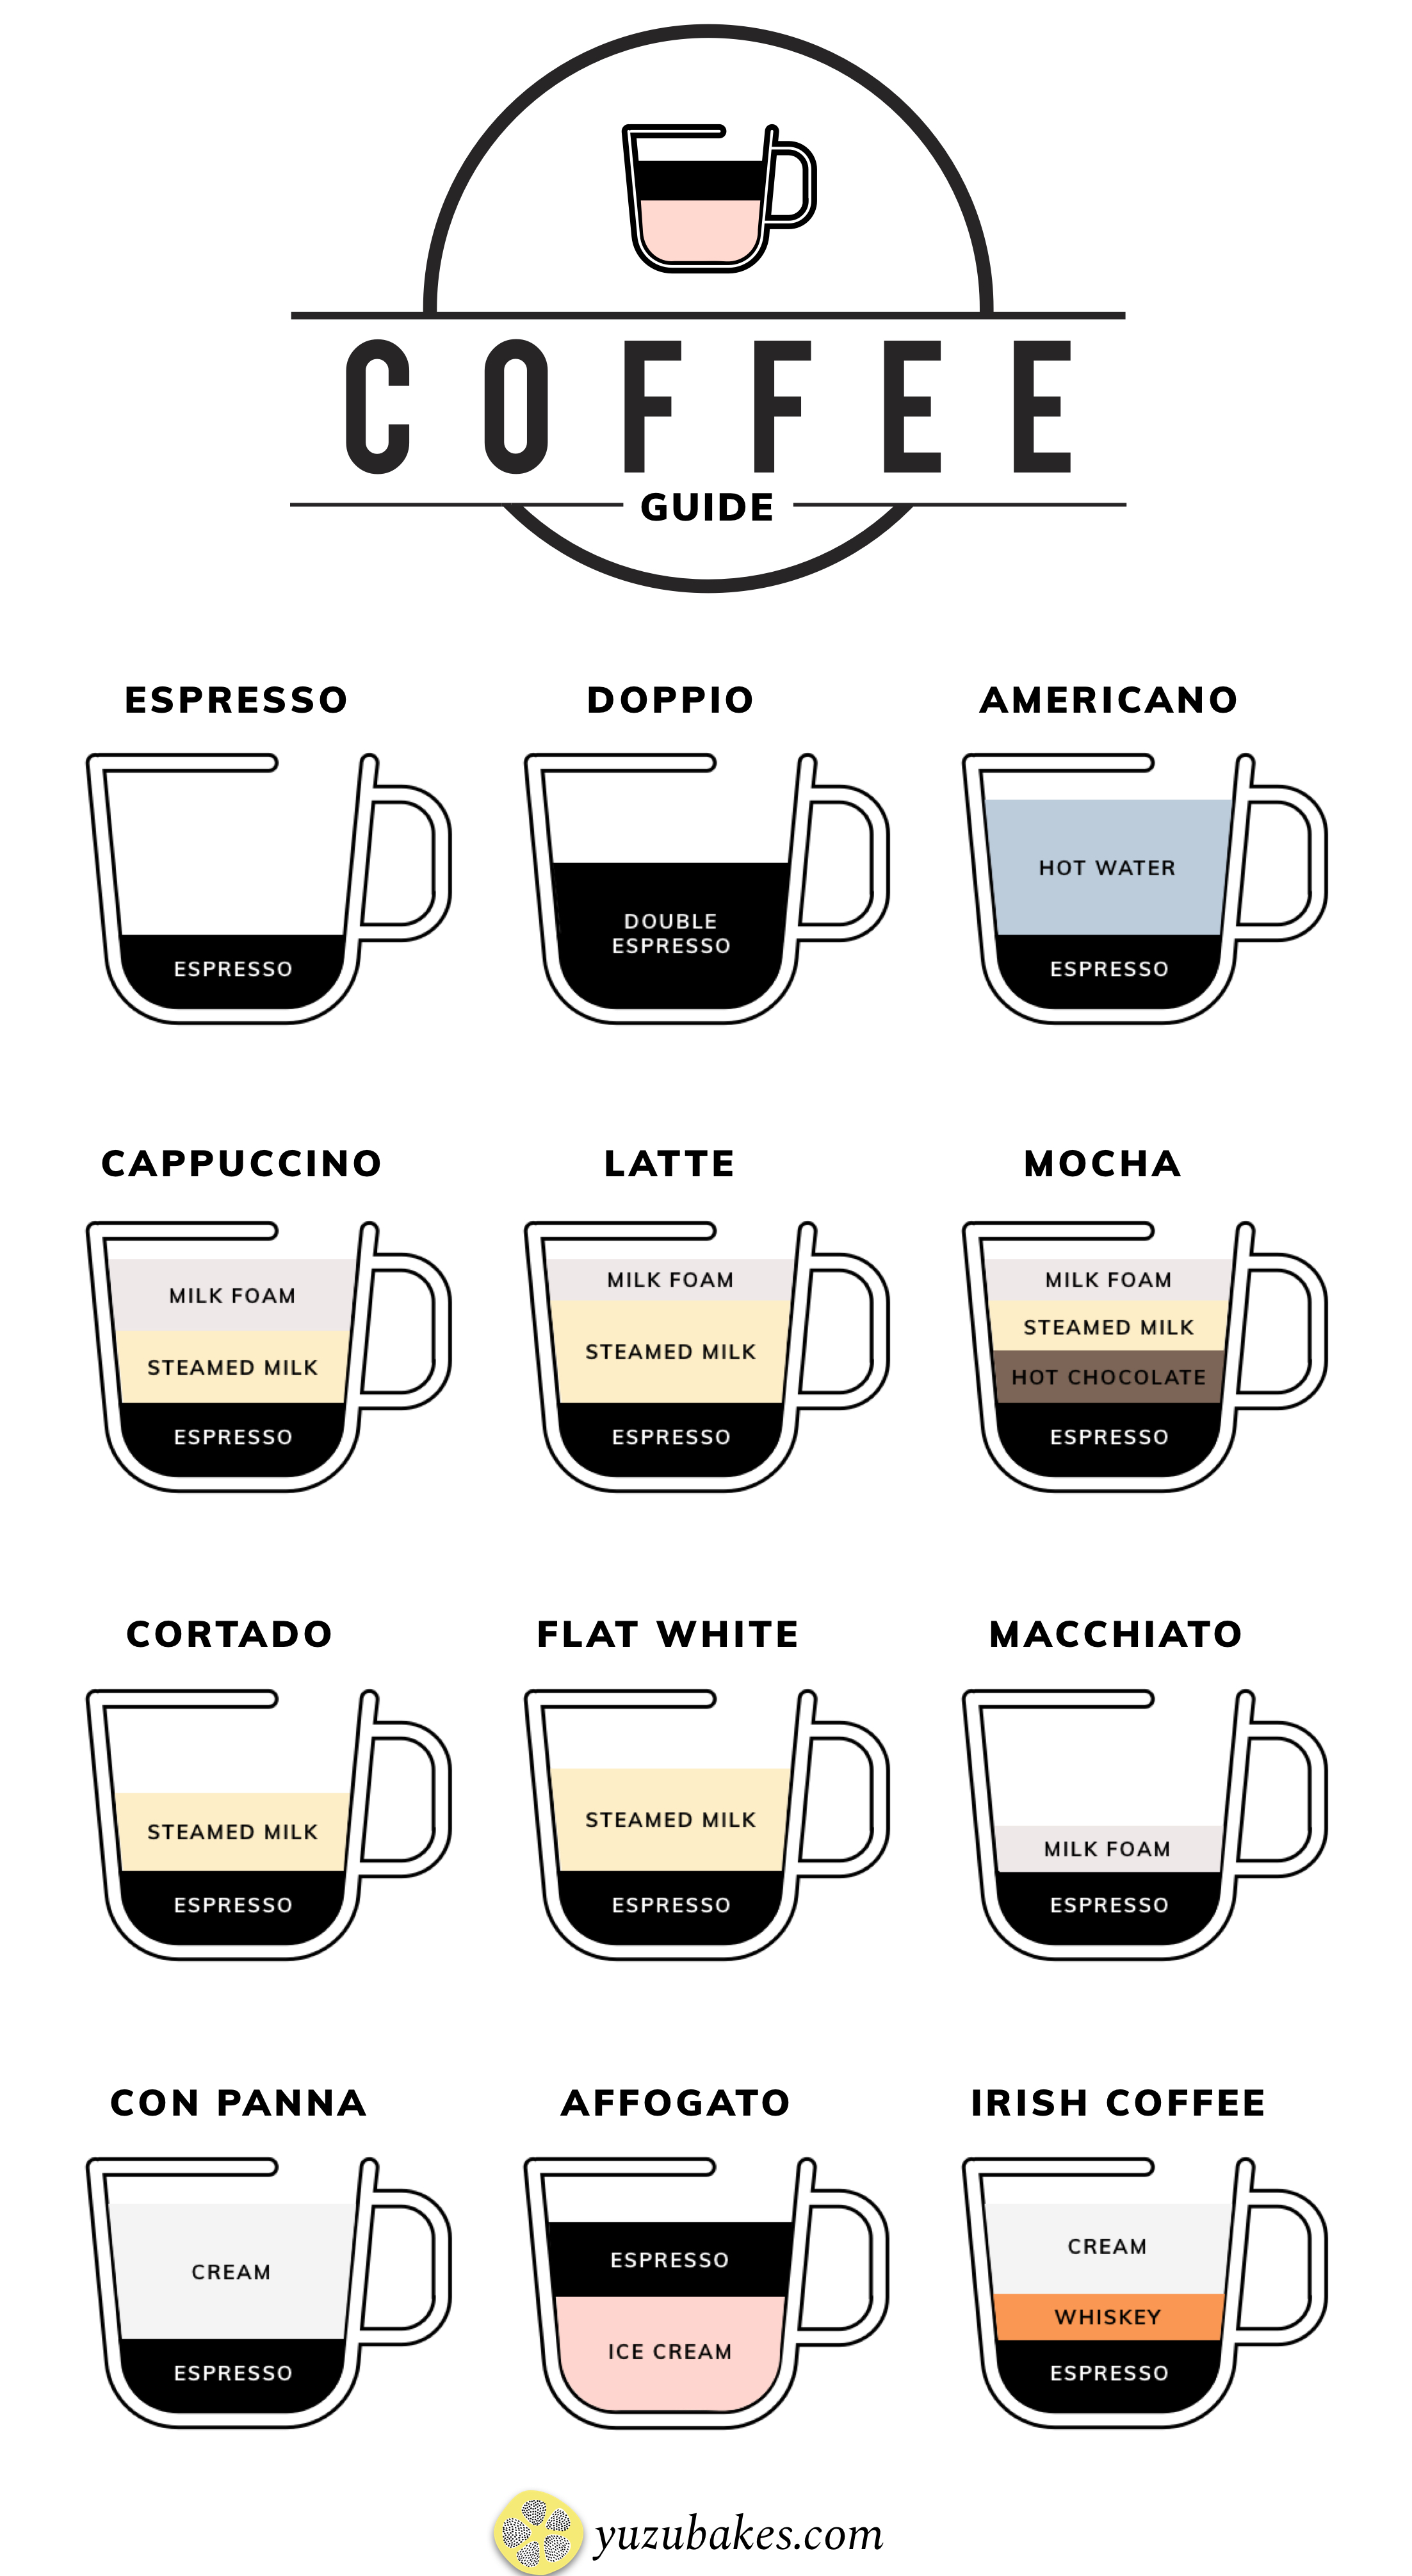 Caffè Misto vs Latte: A Guide to Two Popular Coffee